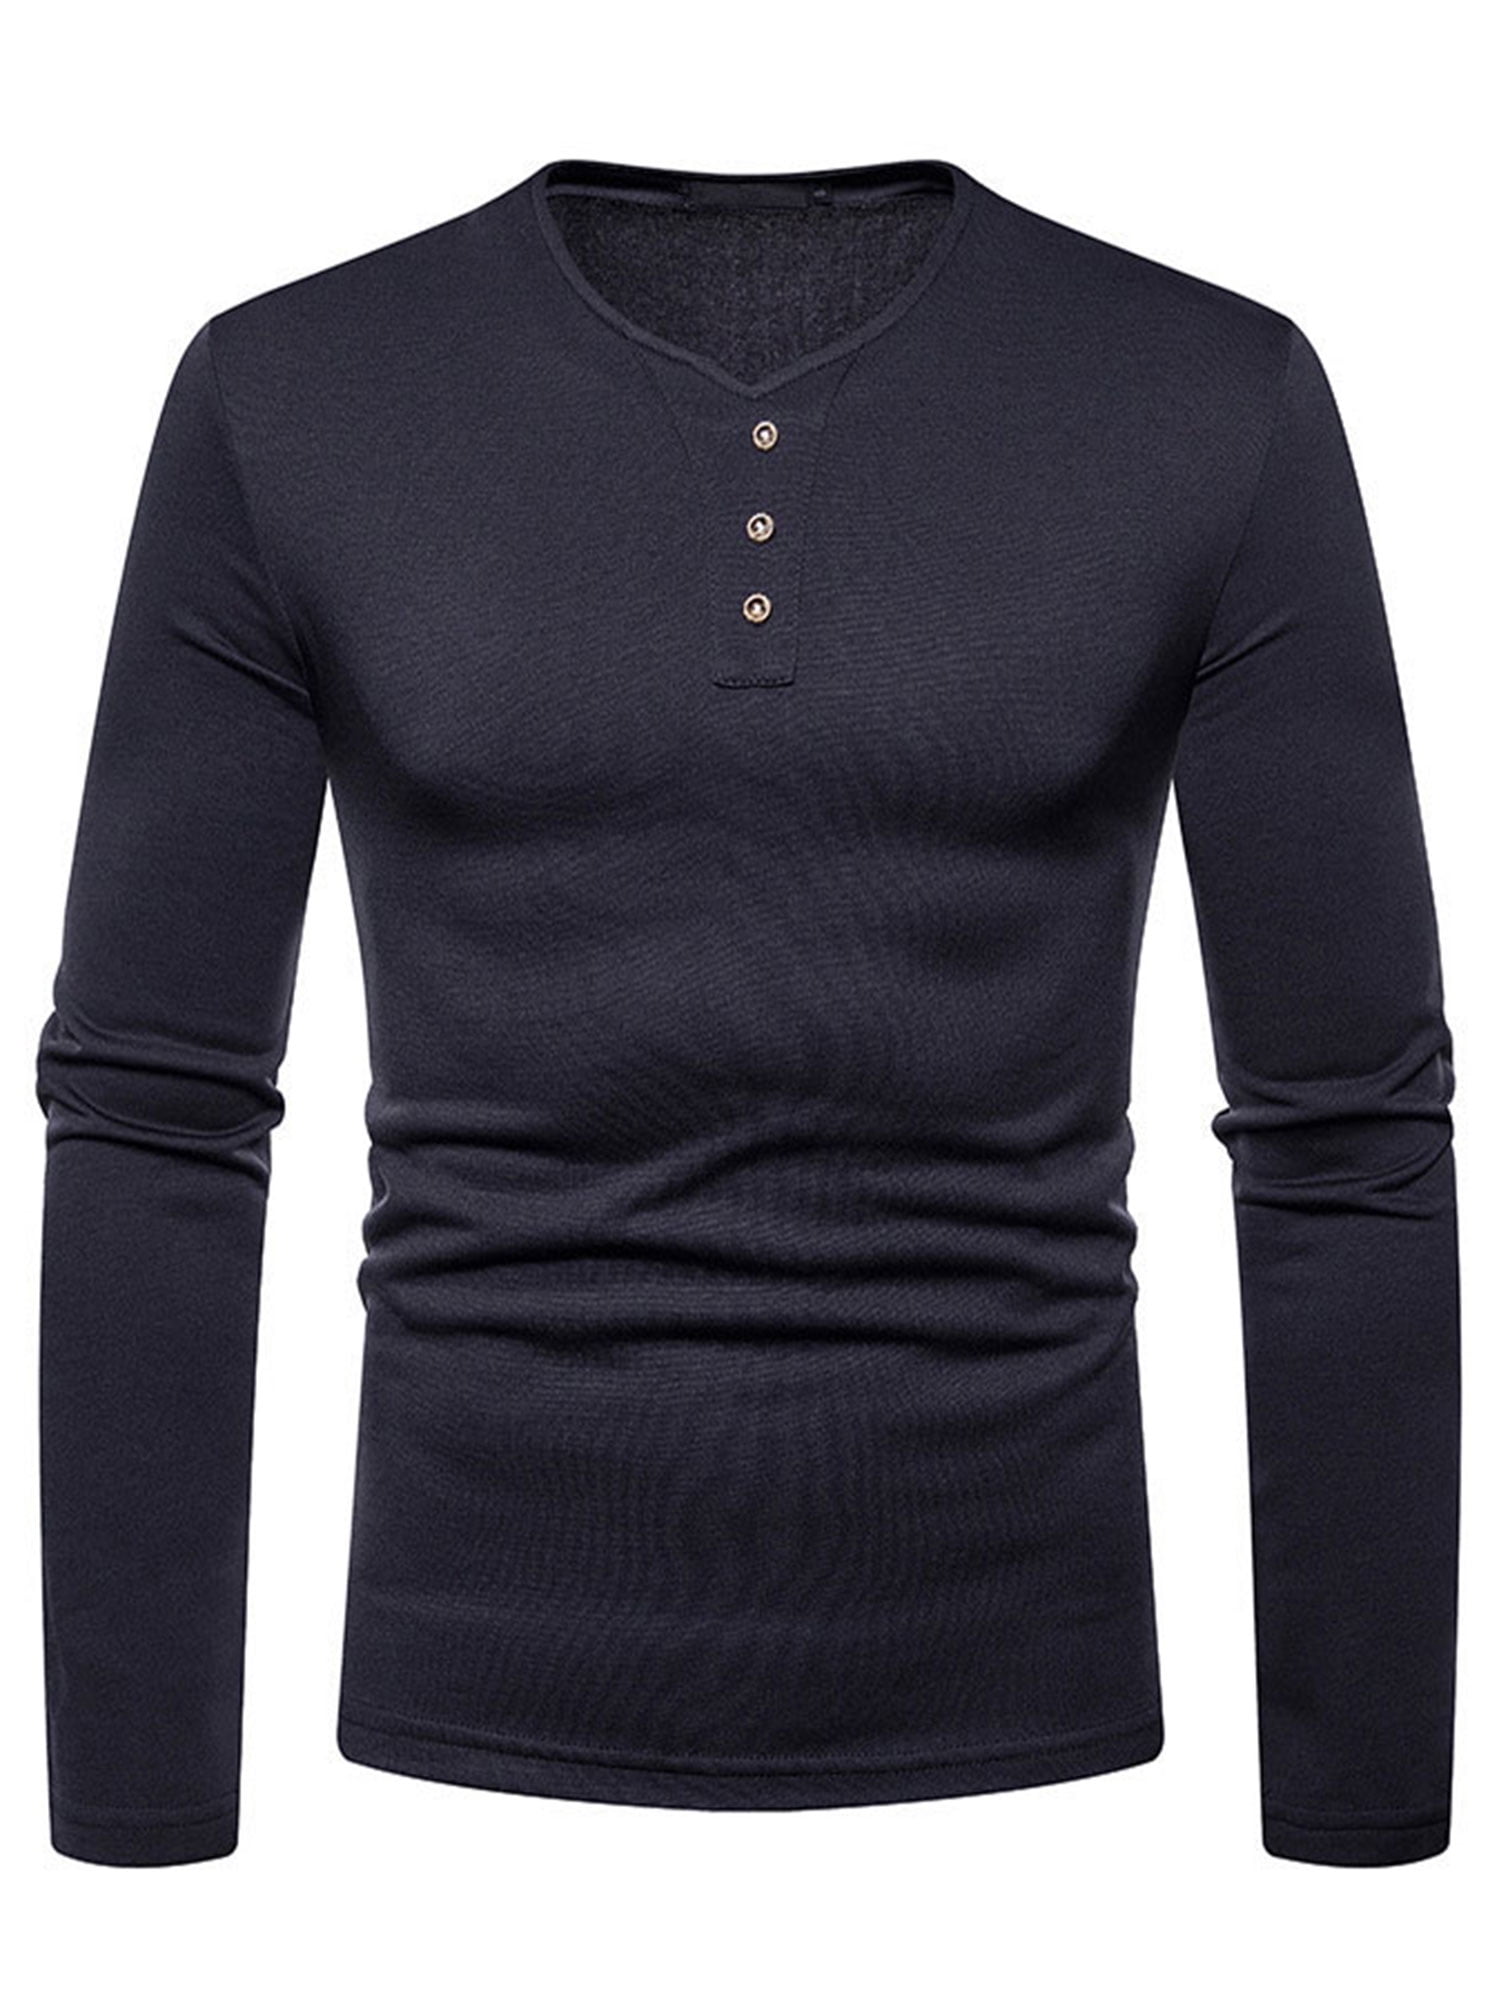 UKAP - Winter V Neck Slim Fit Pullover Shirts for Men Casual Long ...